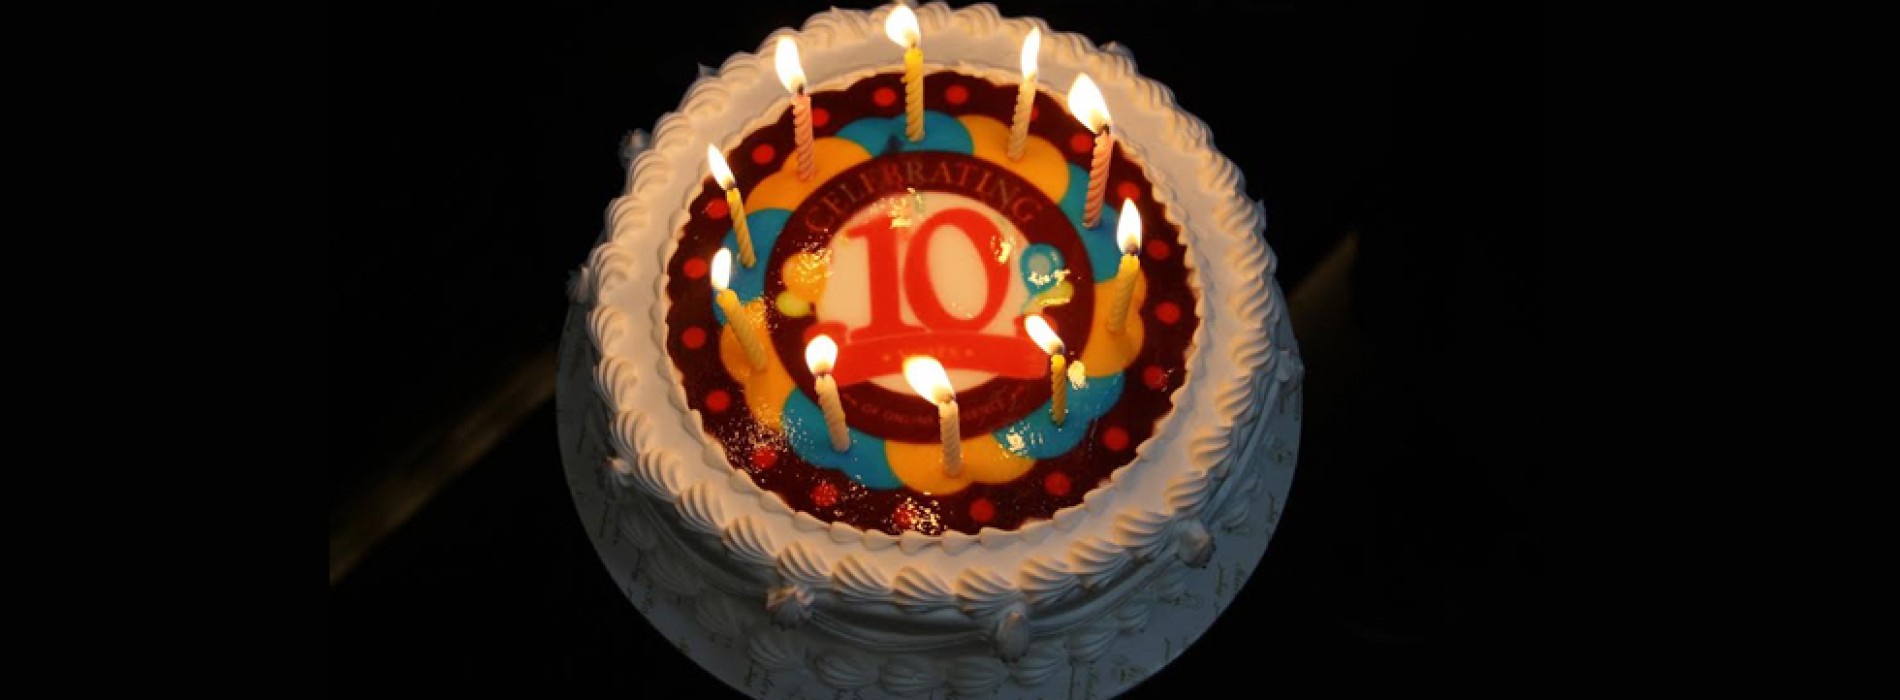 RezLive.com celebrating 10 years of online presence